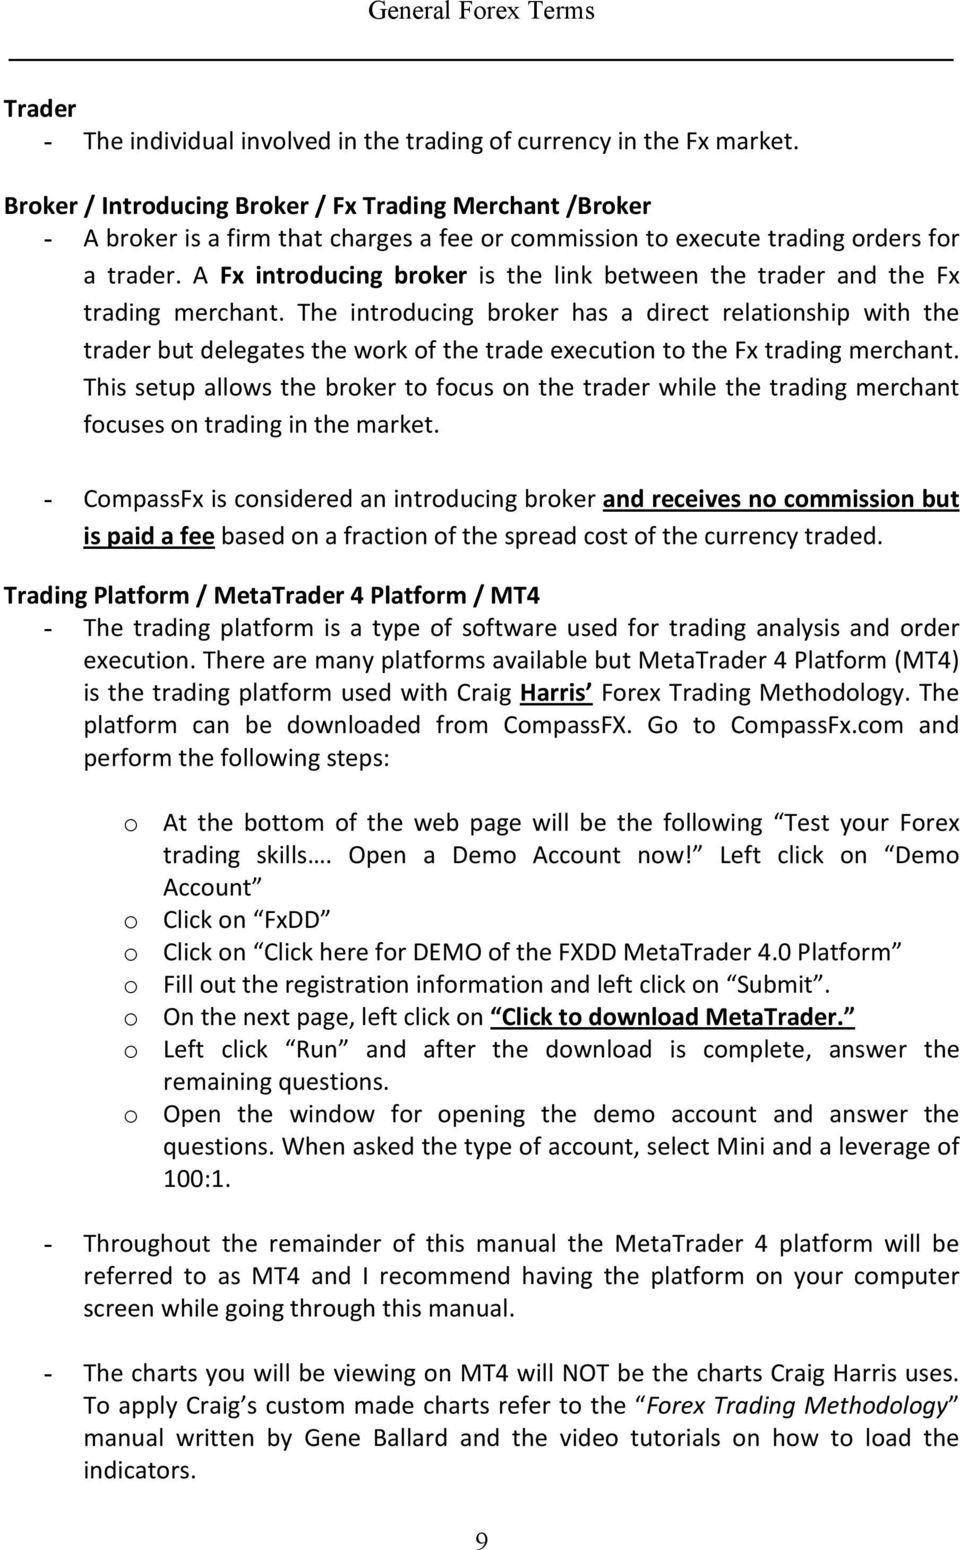 Forex trading methodology by gene ballard forex martingale advisors